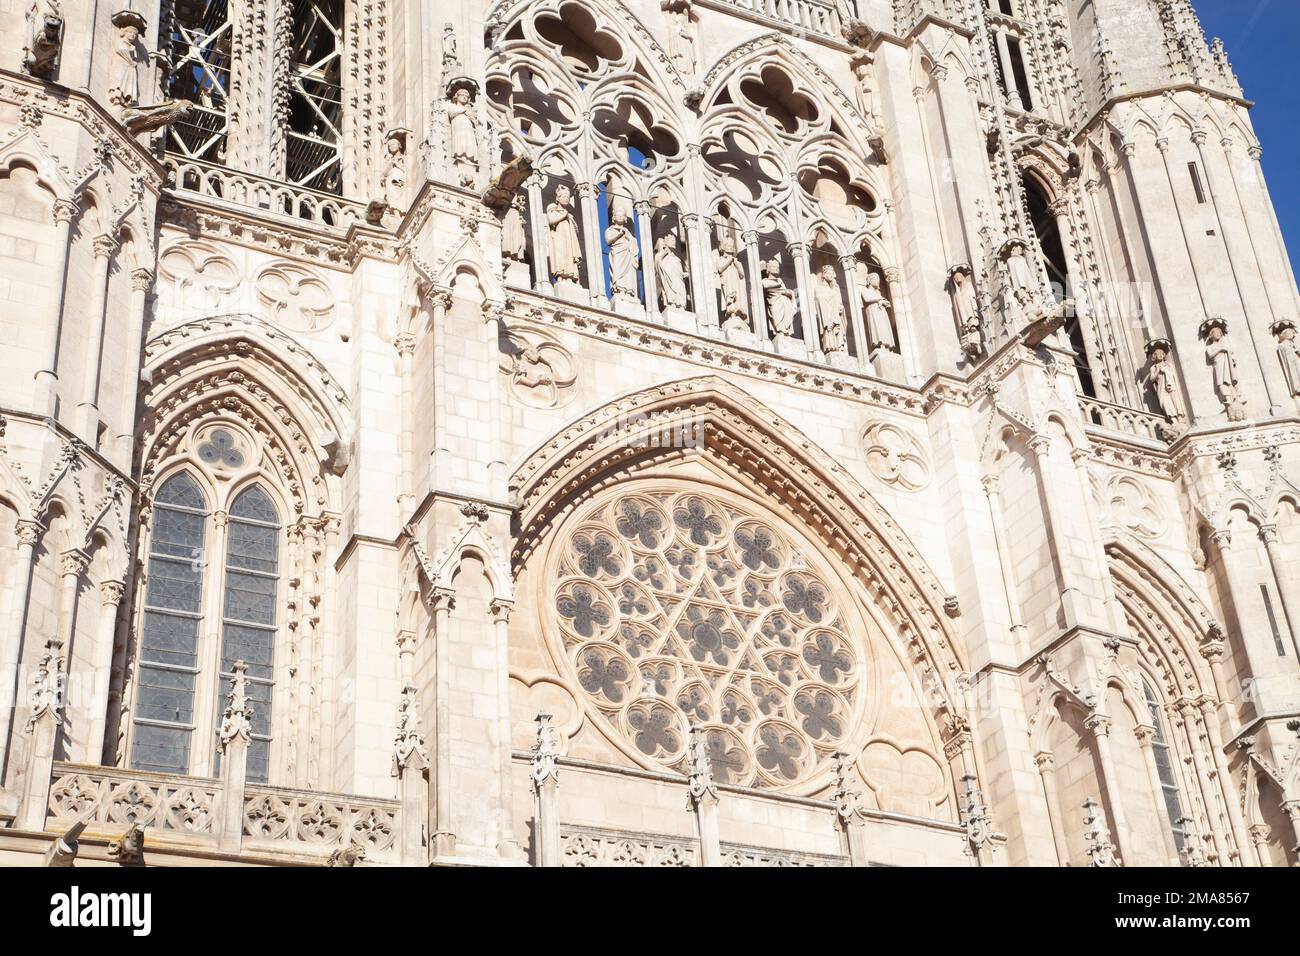 Exterior facade of the cathedral of Burgos Stock Photo